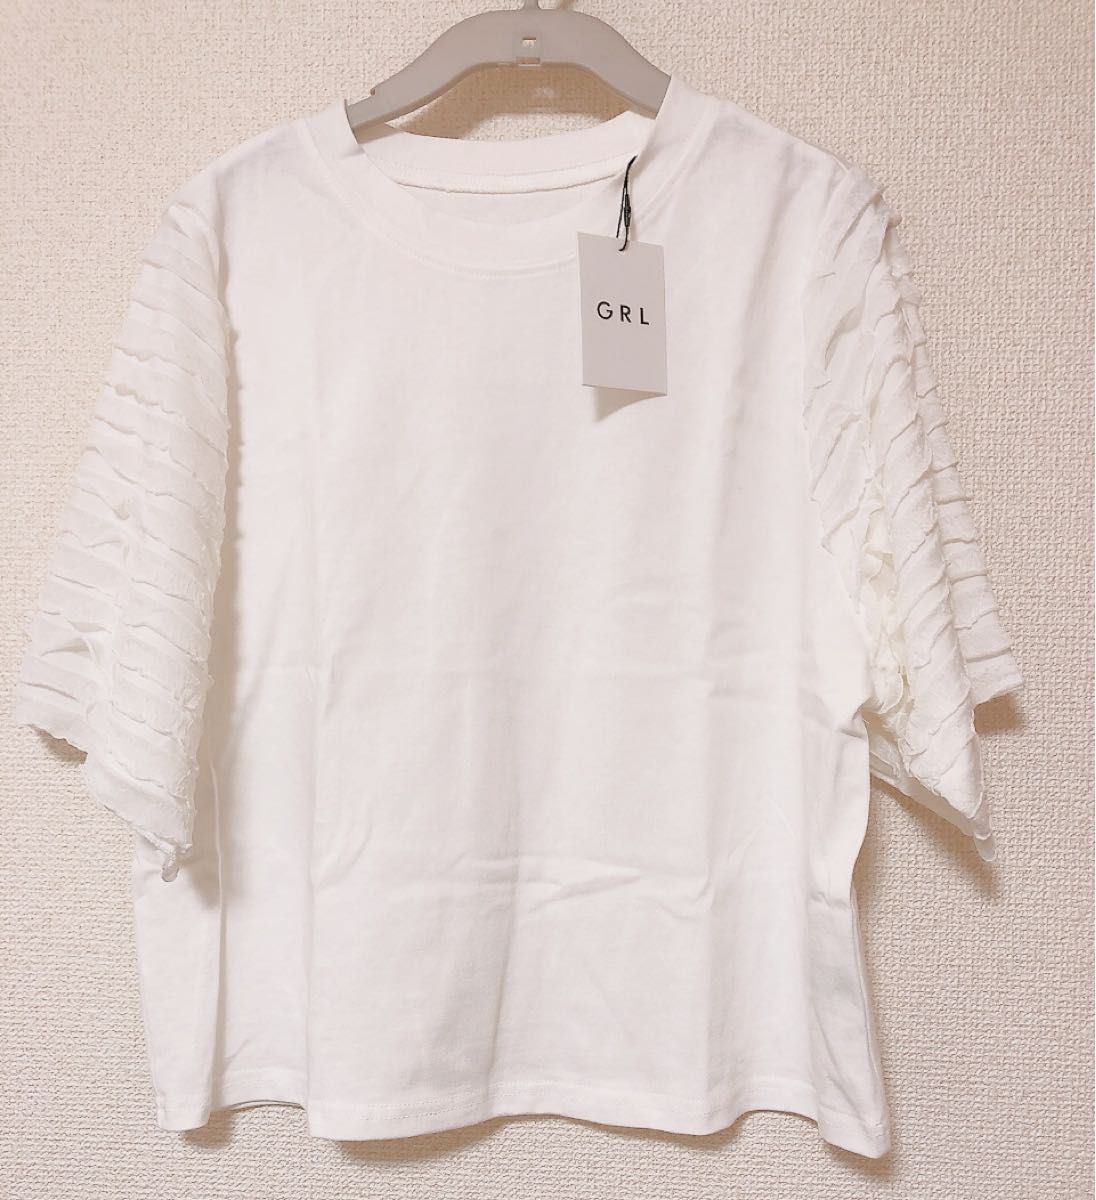 GRL グレイル フリルスリーブTシャツ フリル 半袖 Tシャツ シアー クルーネック 白 ホワイト 淡色 新品未使用 タグ付き